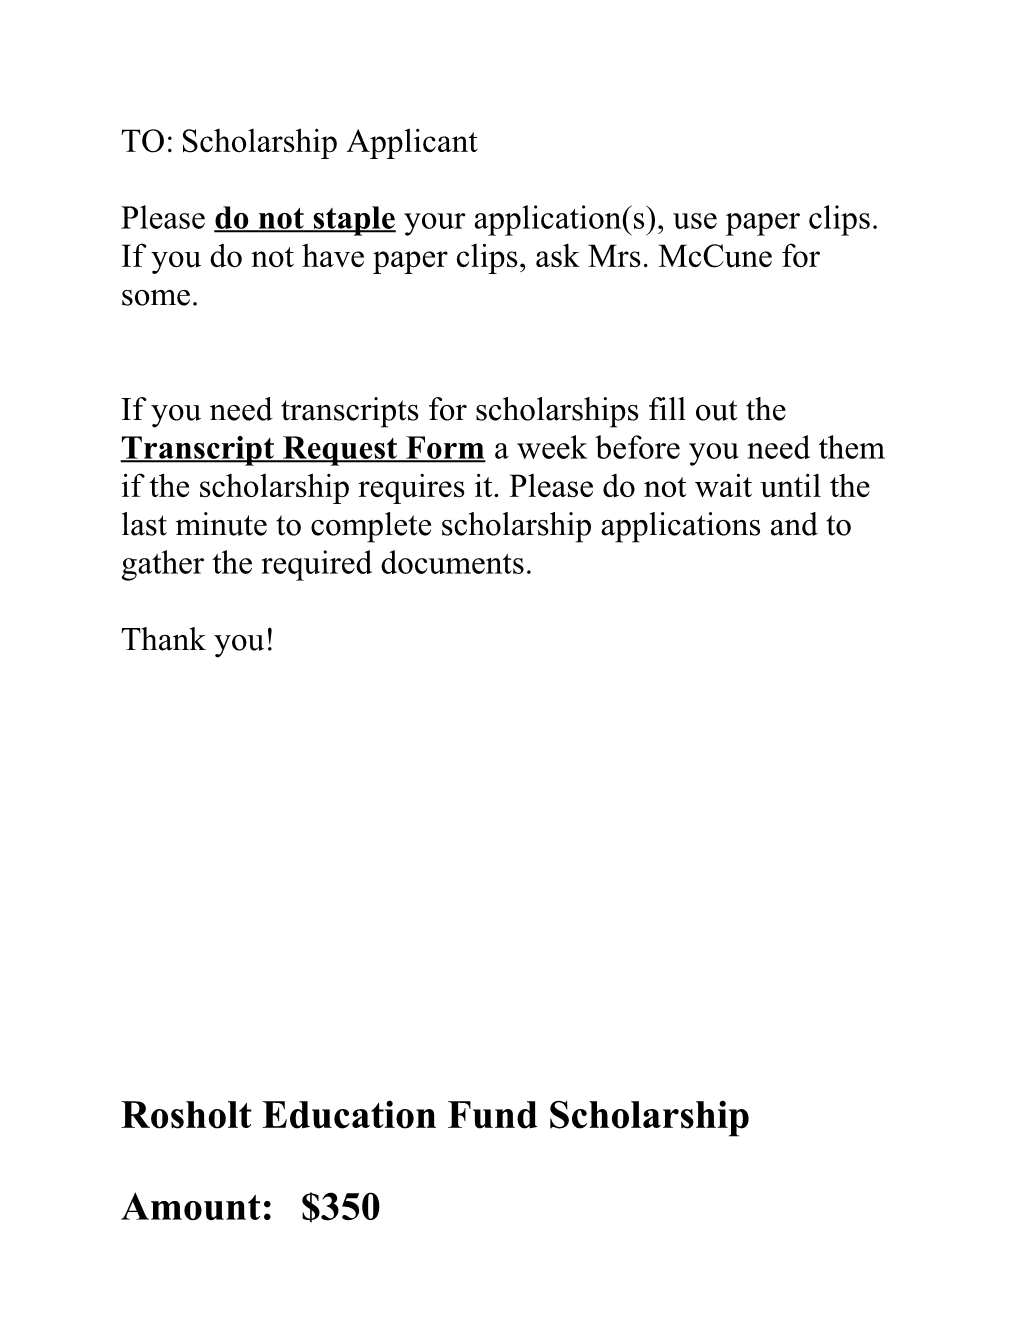 Rosholt Education Foundation, Inc